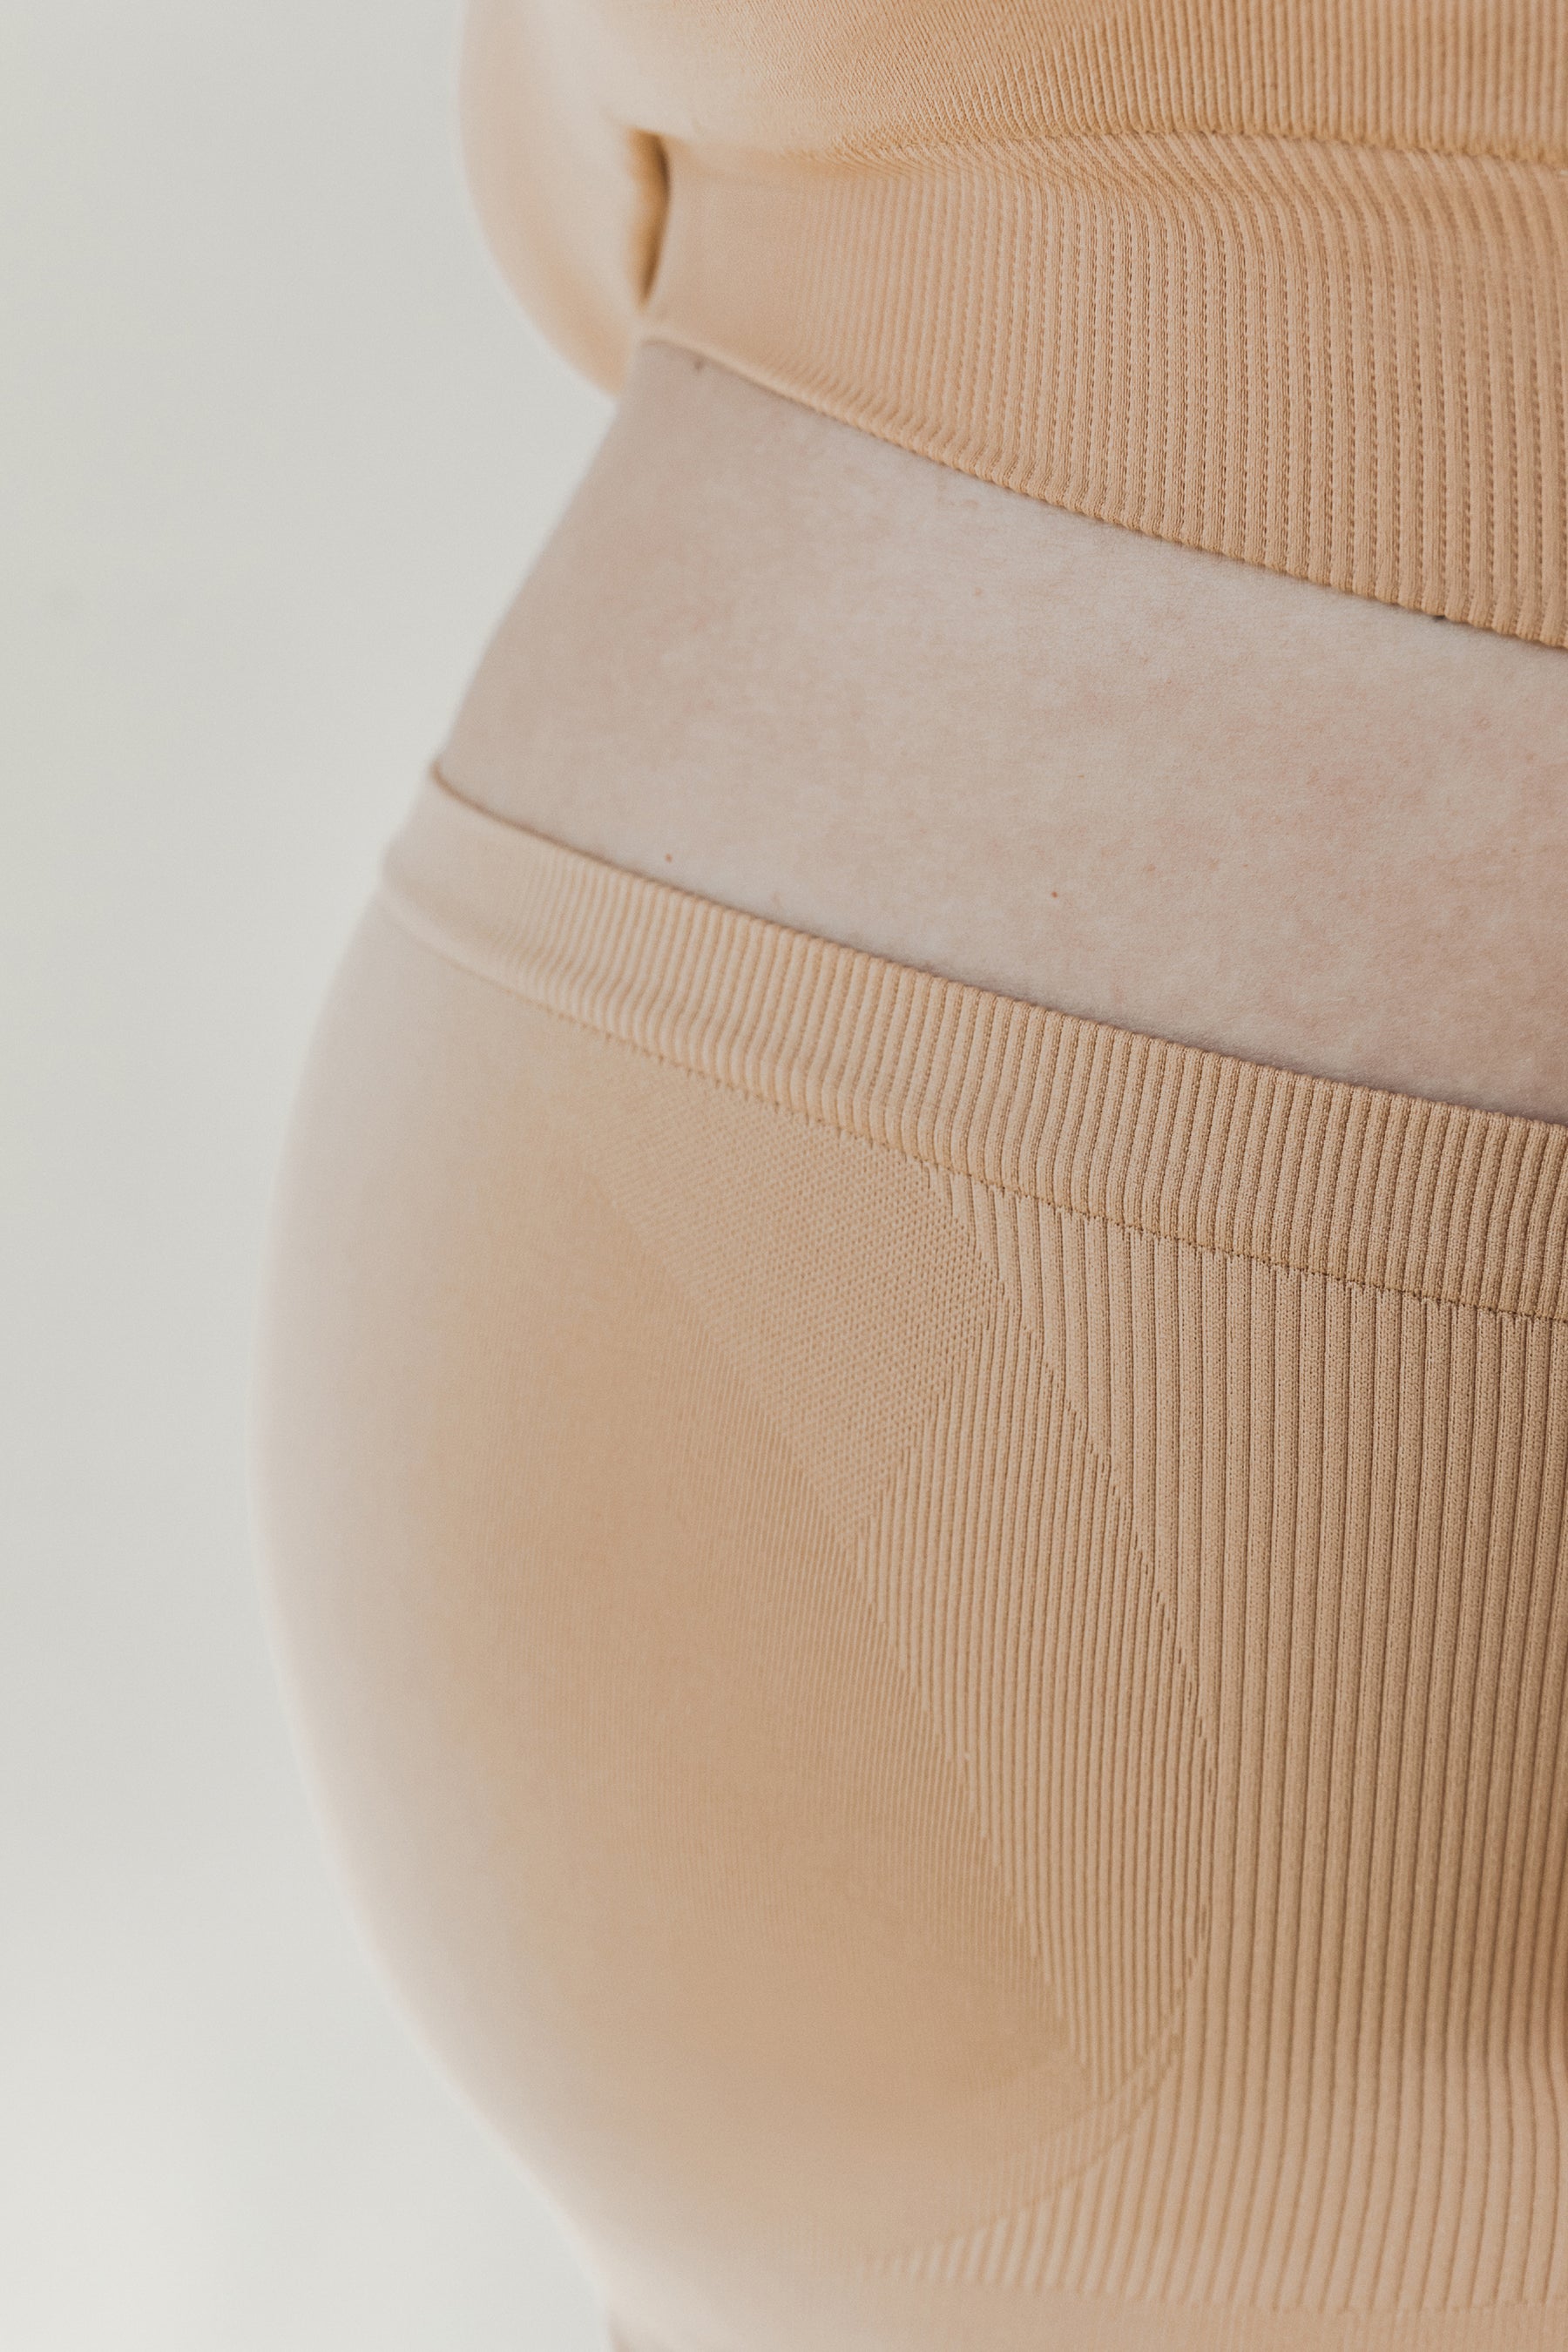 Maternity Underwear Styles